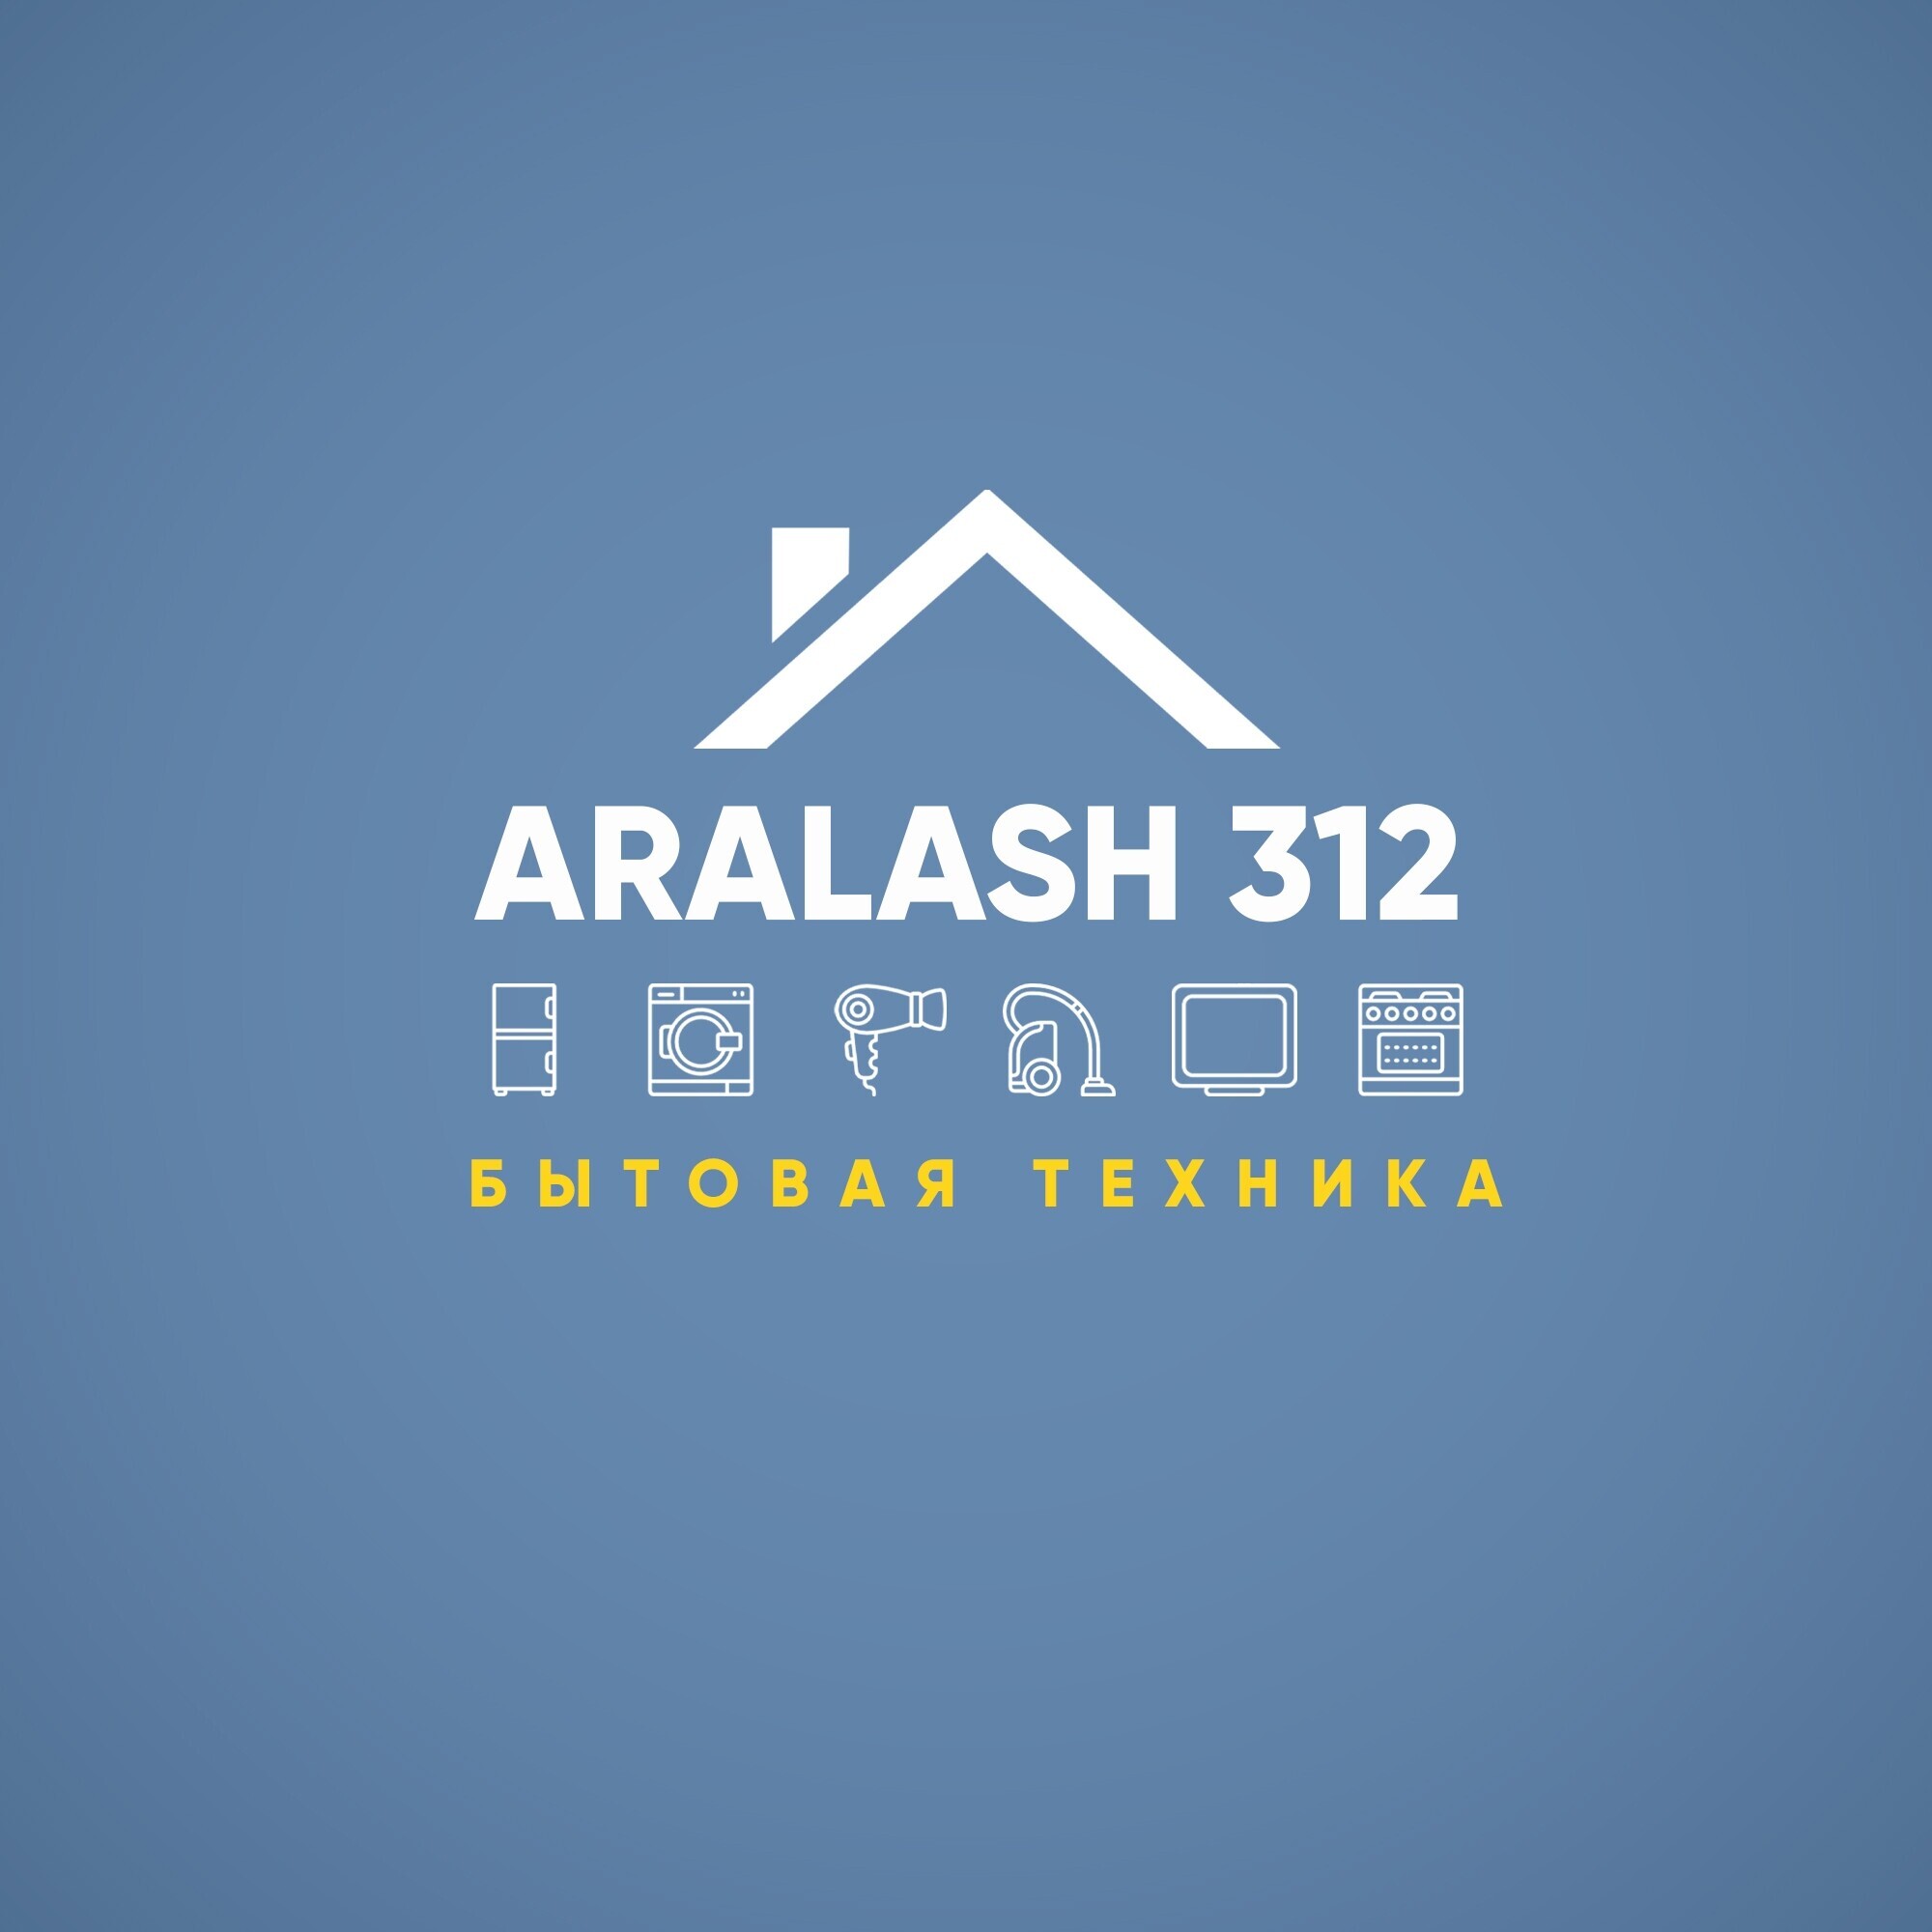 Aralash - Бизнес-профиль компании на lalafo.kg | Кыргызстан